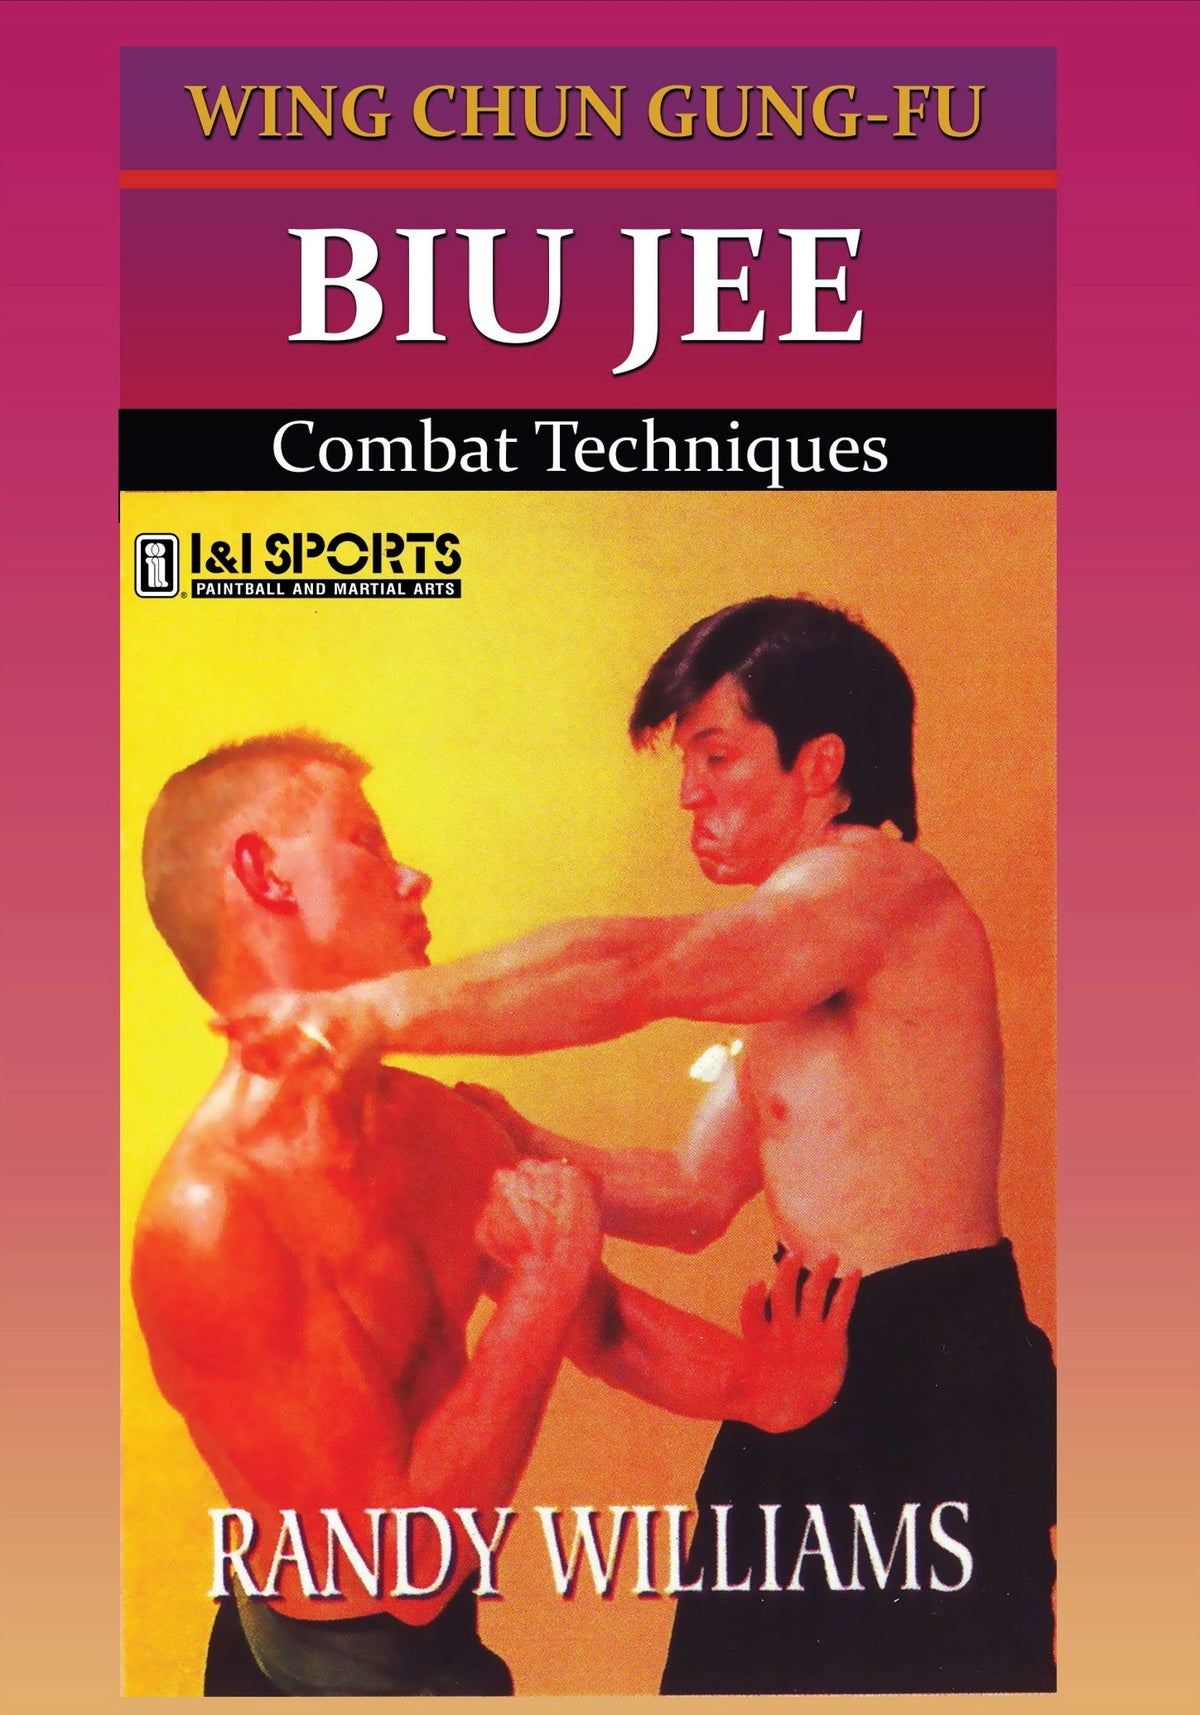 Wing Chun Gung Fu Biu Jee Combat Techniques DVD Randy Williams